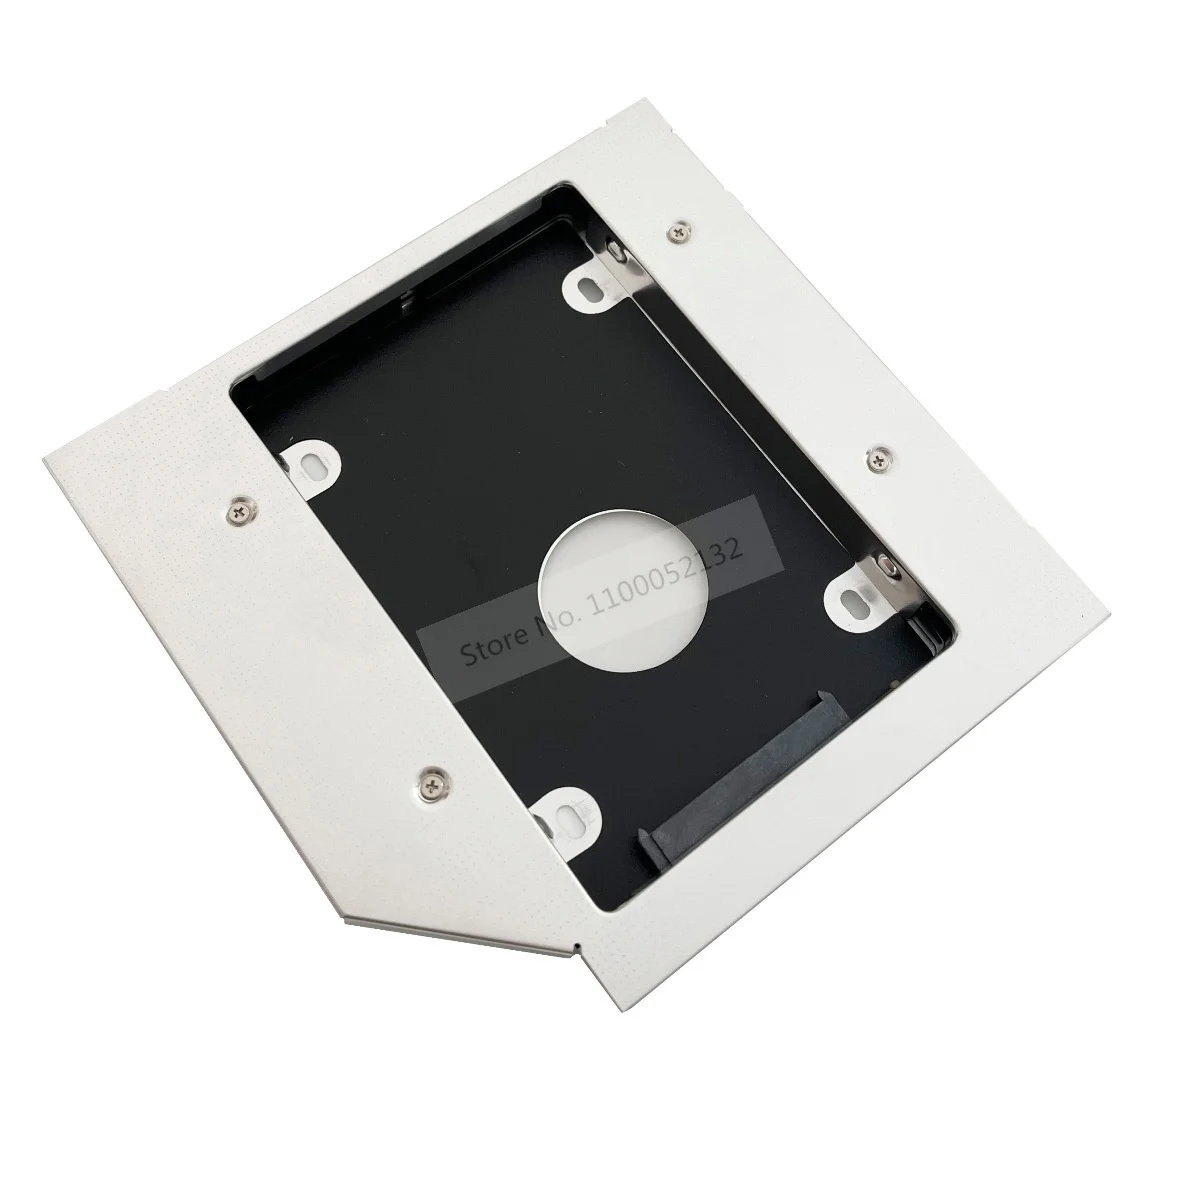 

Aluminum 2nd Hard Drive HDD SSD Case Enclosure Optical Frame 12.7mm bay Caddy SATA for ASUS K40IJ K40IN K50AB-X2A K50IJ K50IN